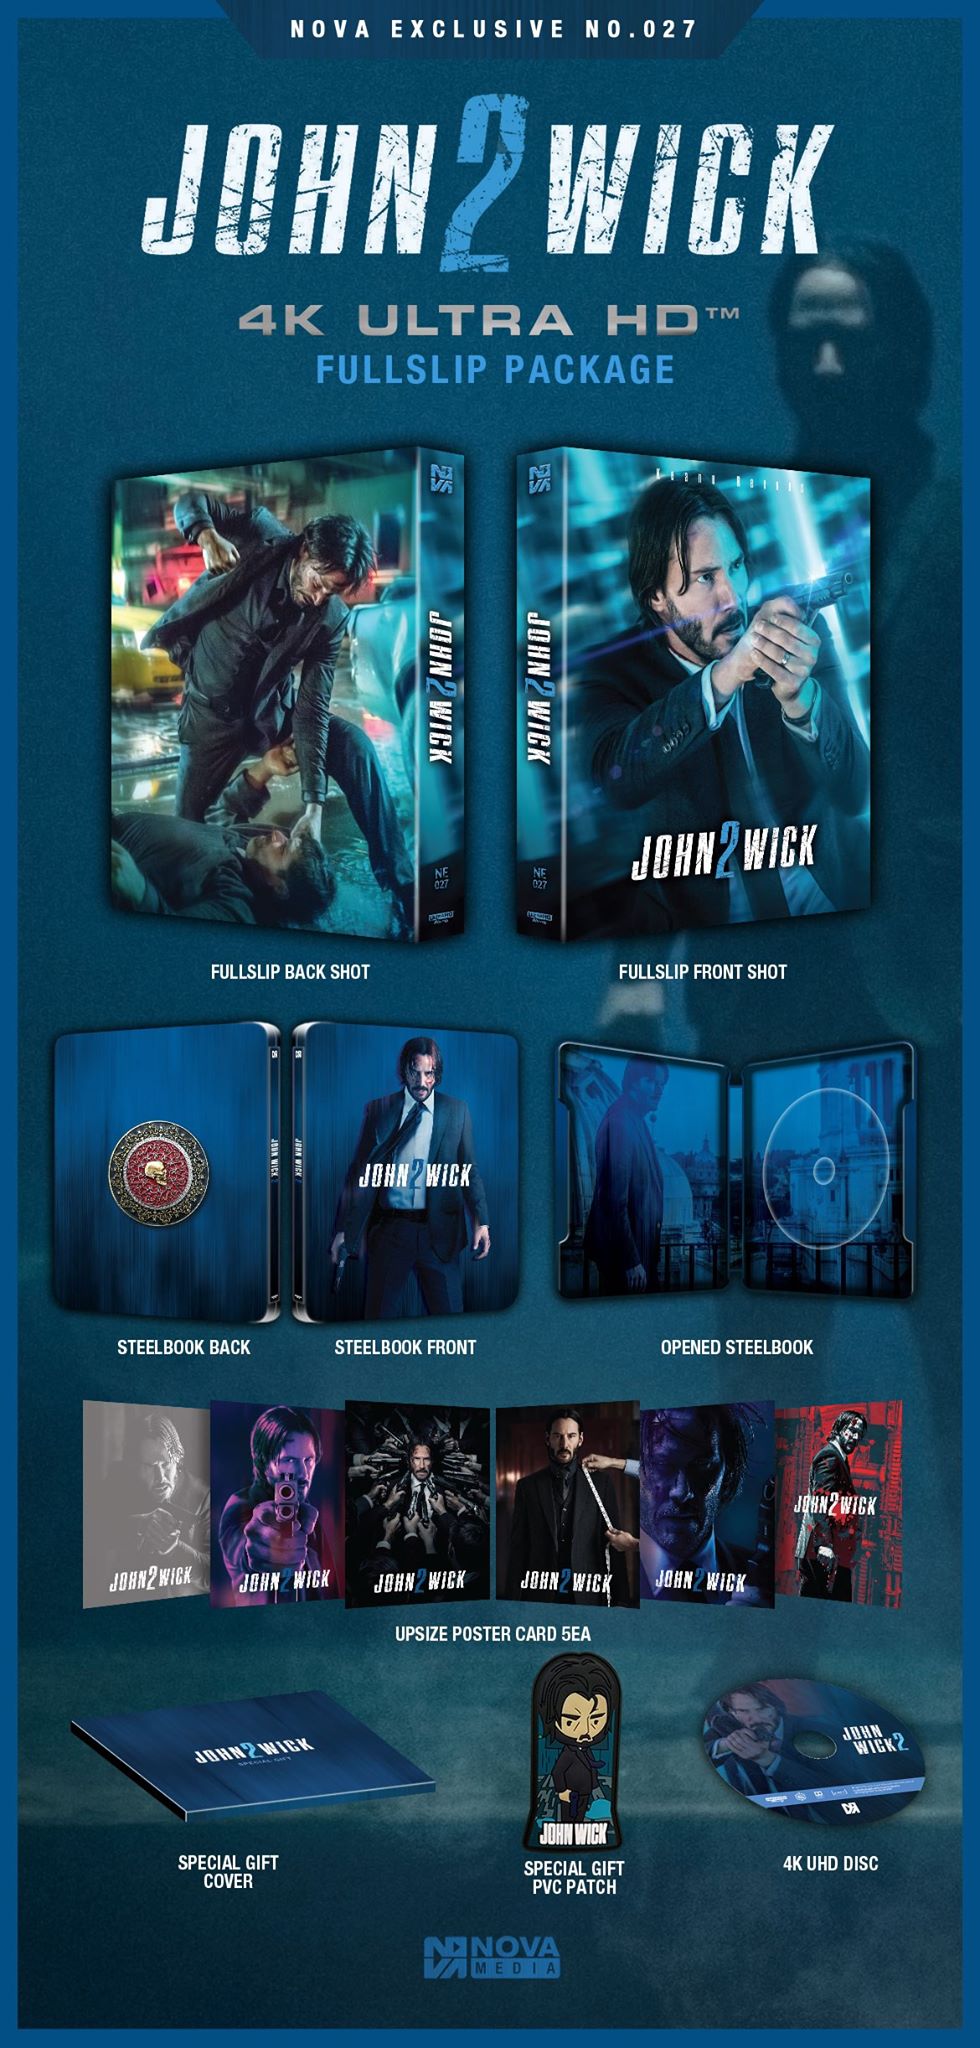 Nova Media John Wick 2 4k Uhd Steelbook Ne 27 One Click Set Hi Def Ninja Pop Culture Movie Collectible Community